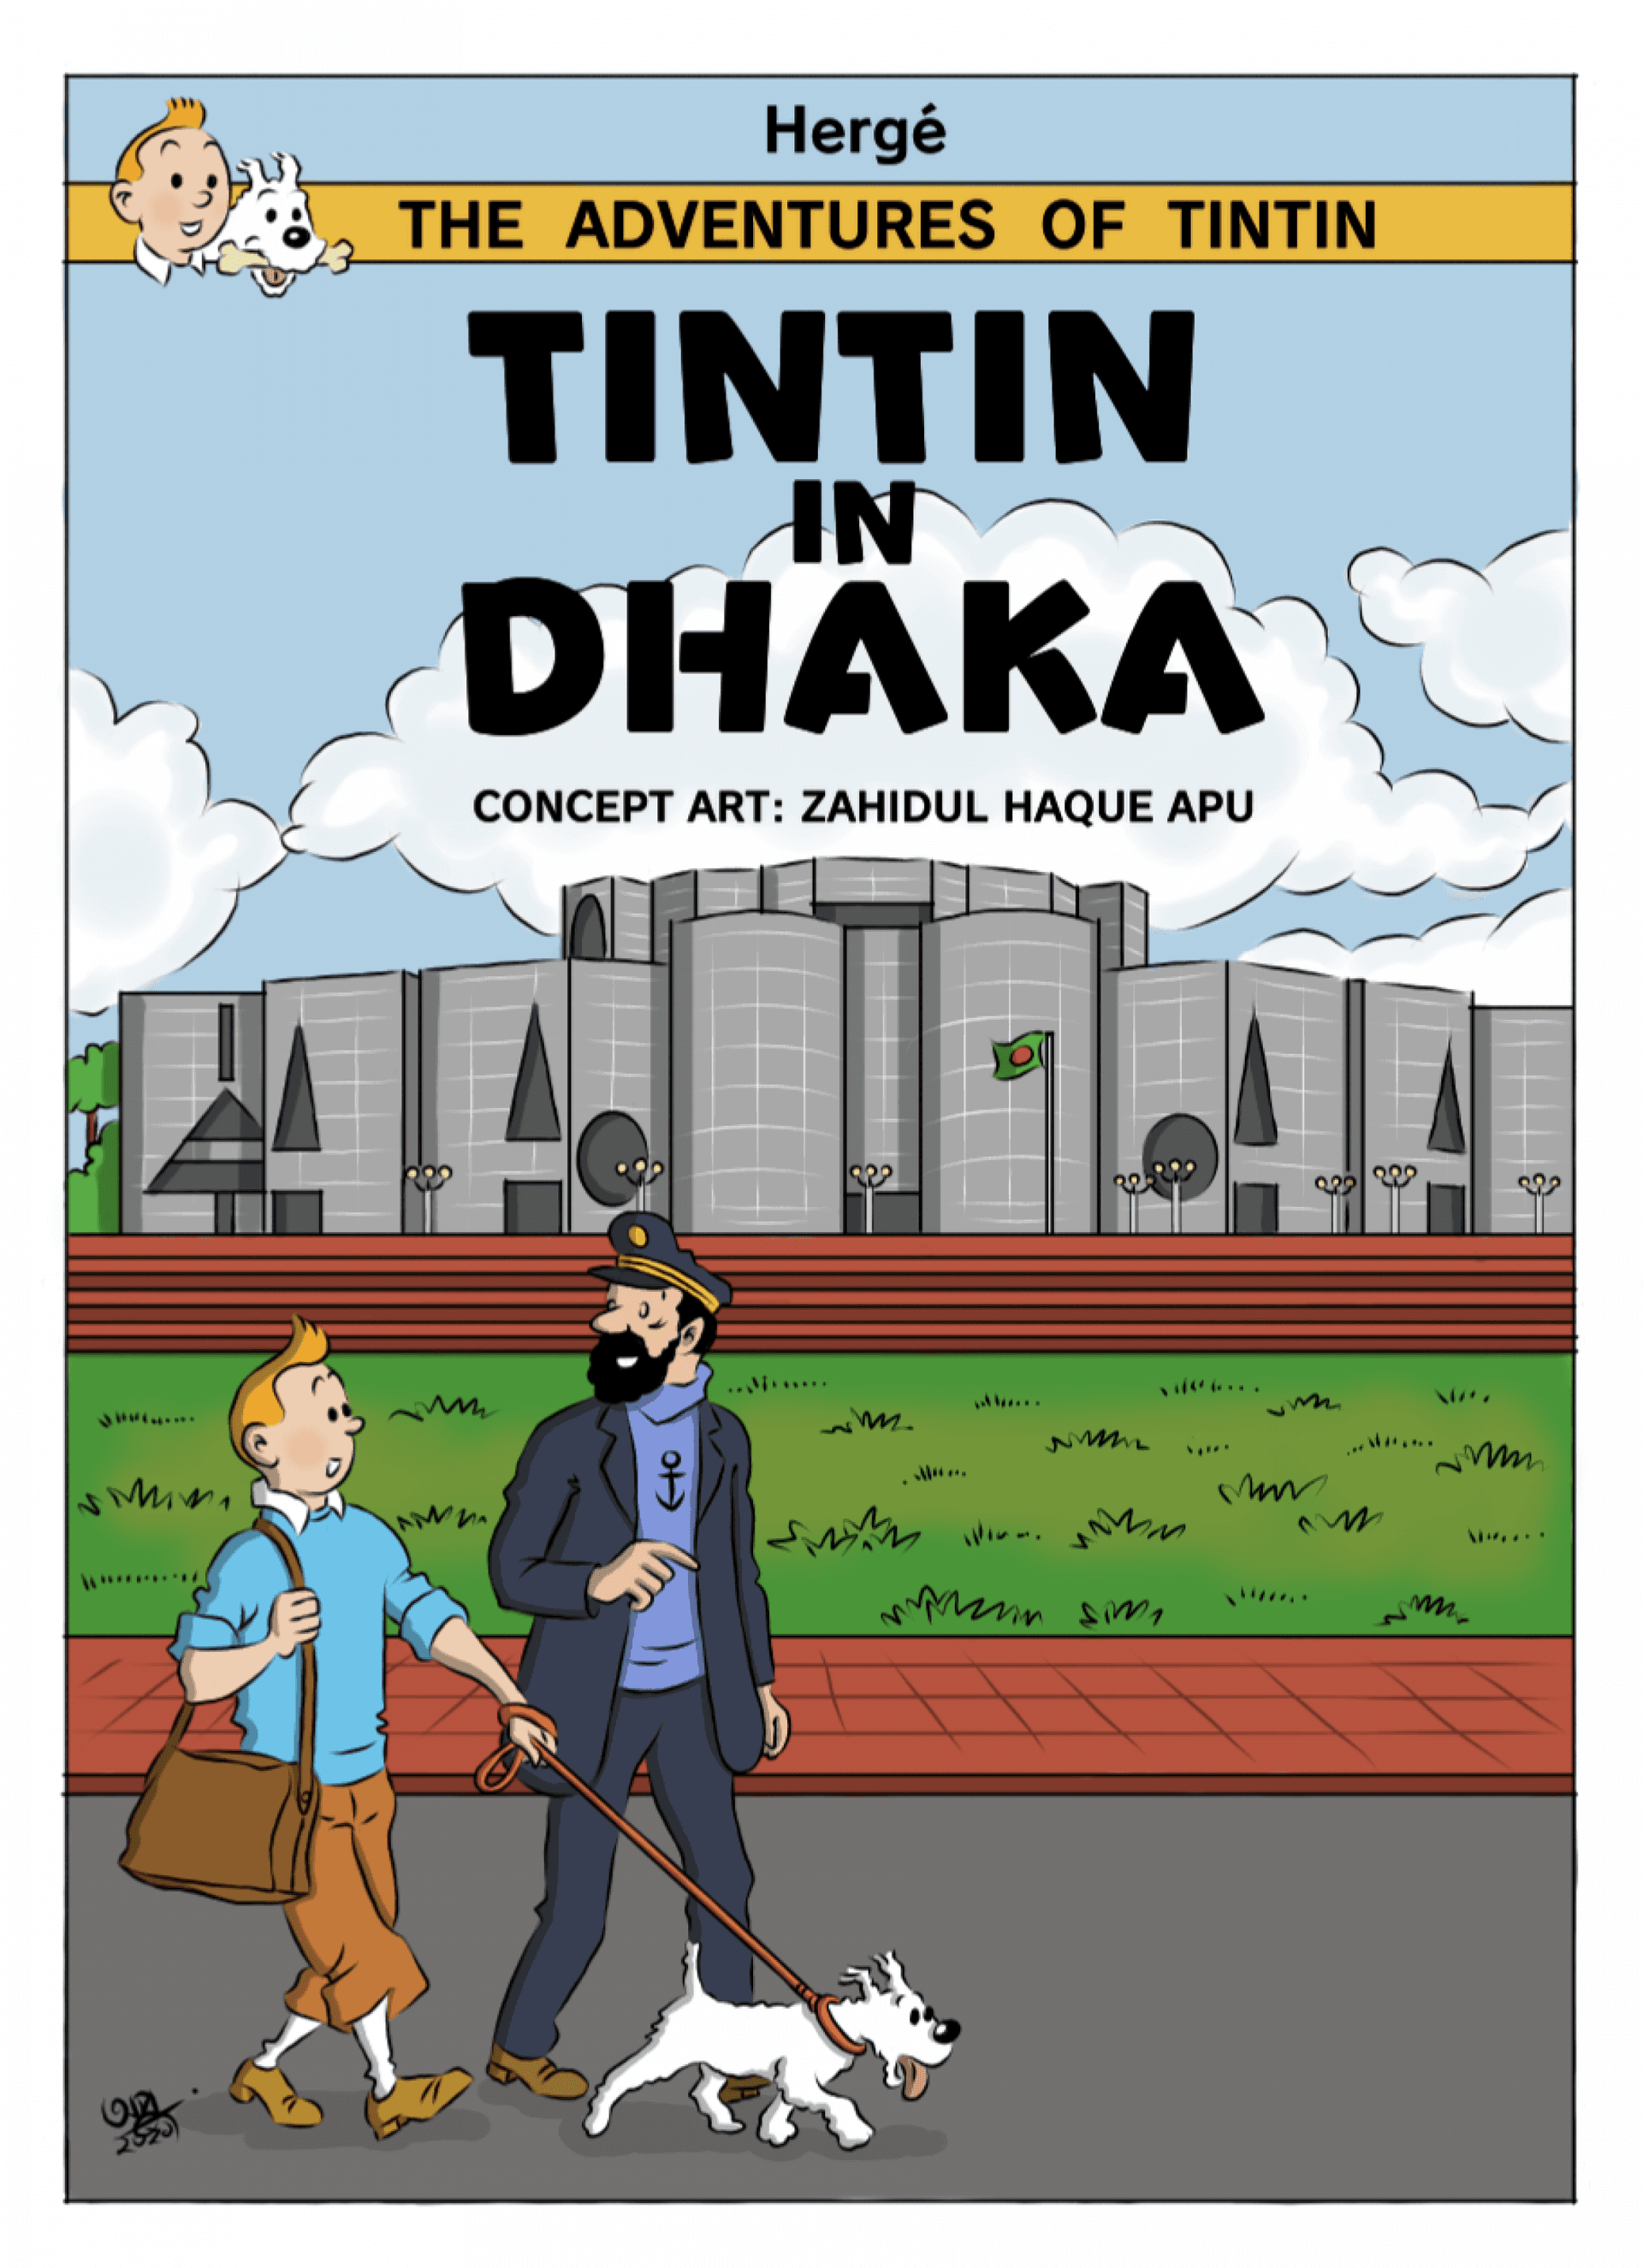 Cover art of character Tintin in Dhaka, Bangladesh